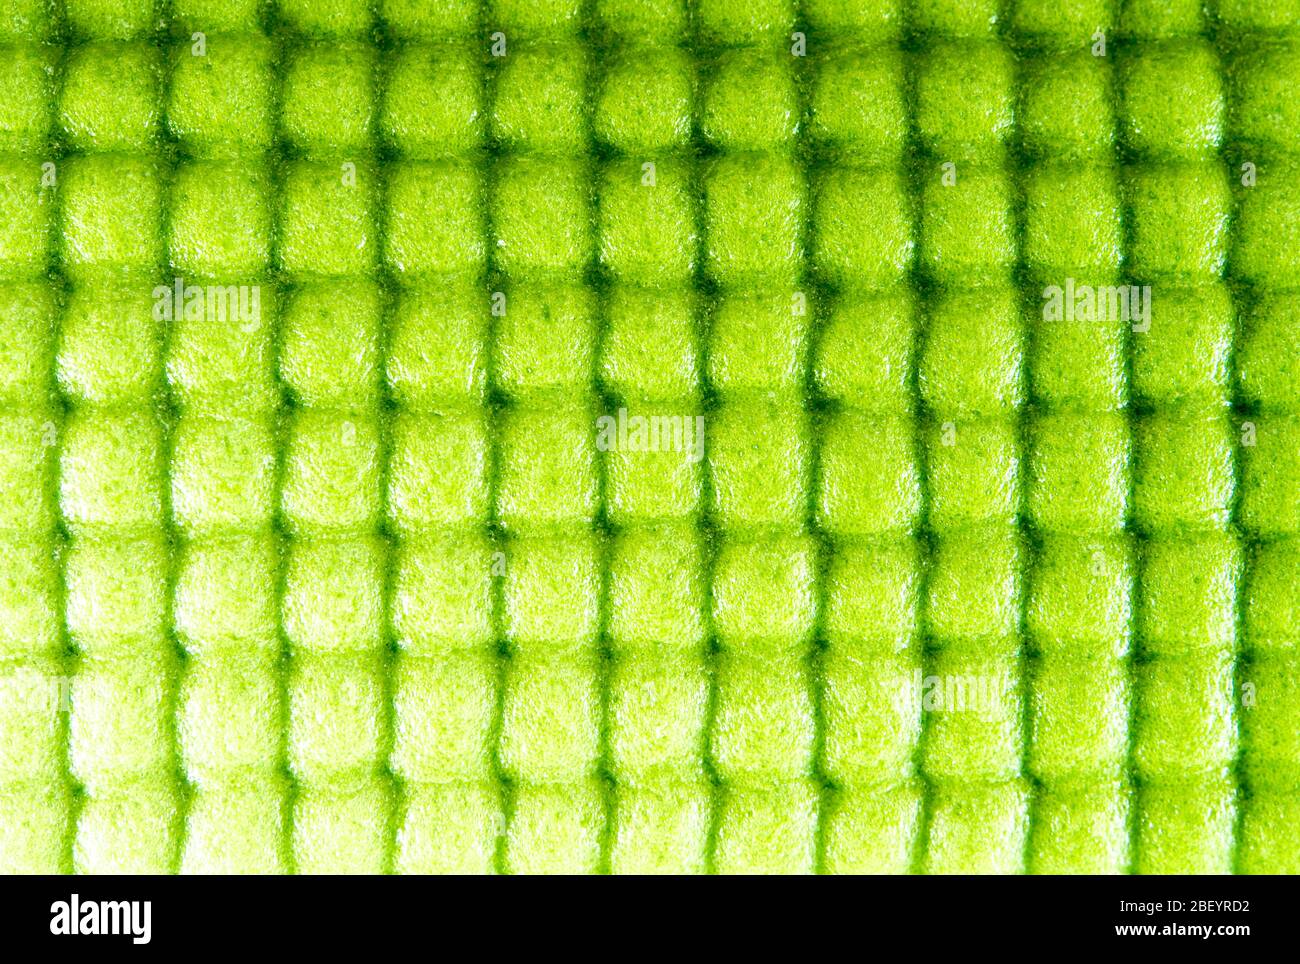 Sponge rubber foam sheet texture of mat for Yoga activity Stock Photo